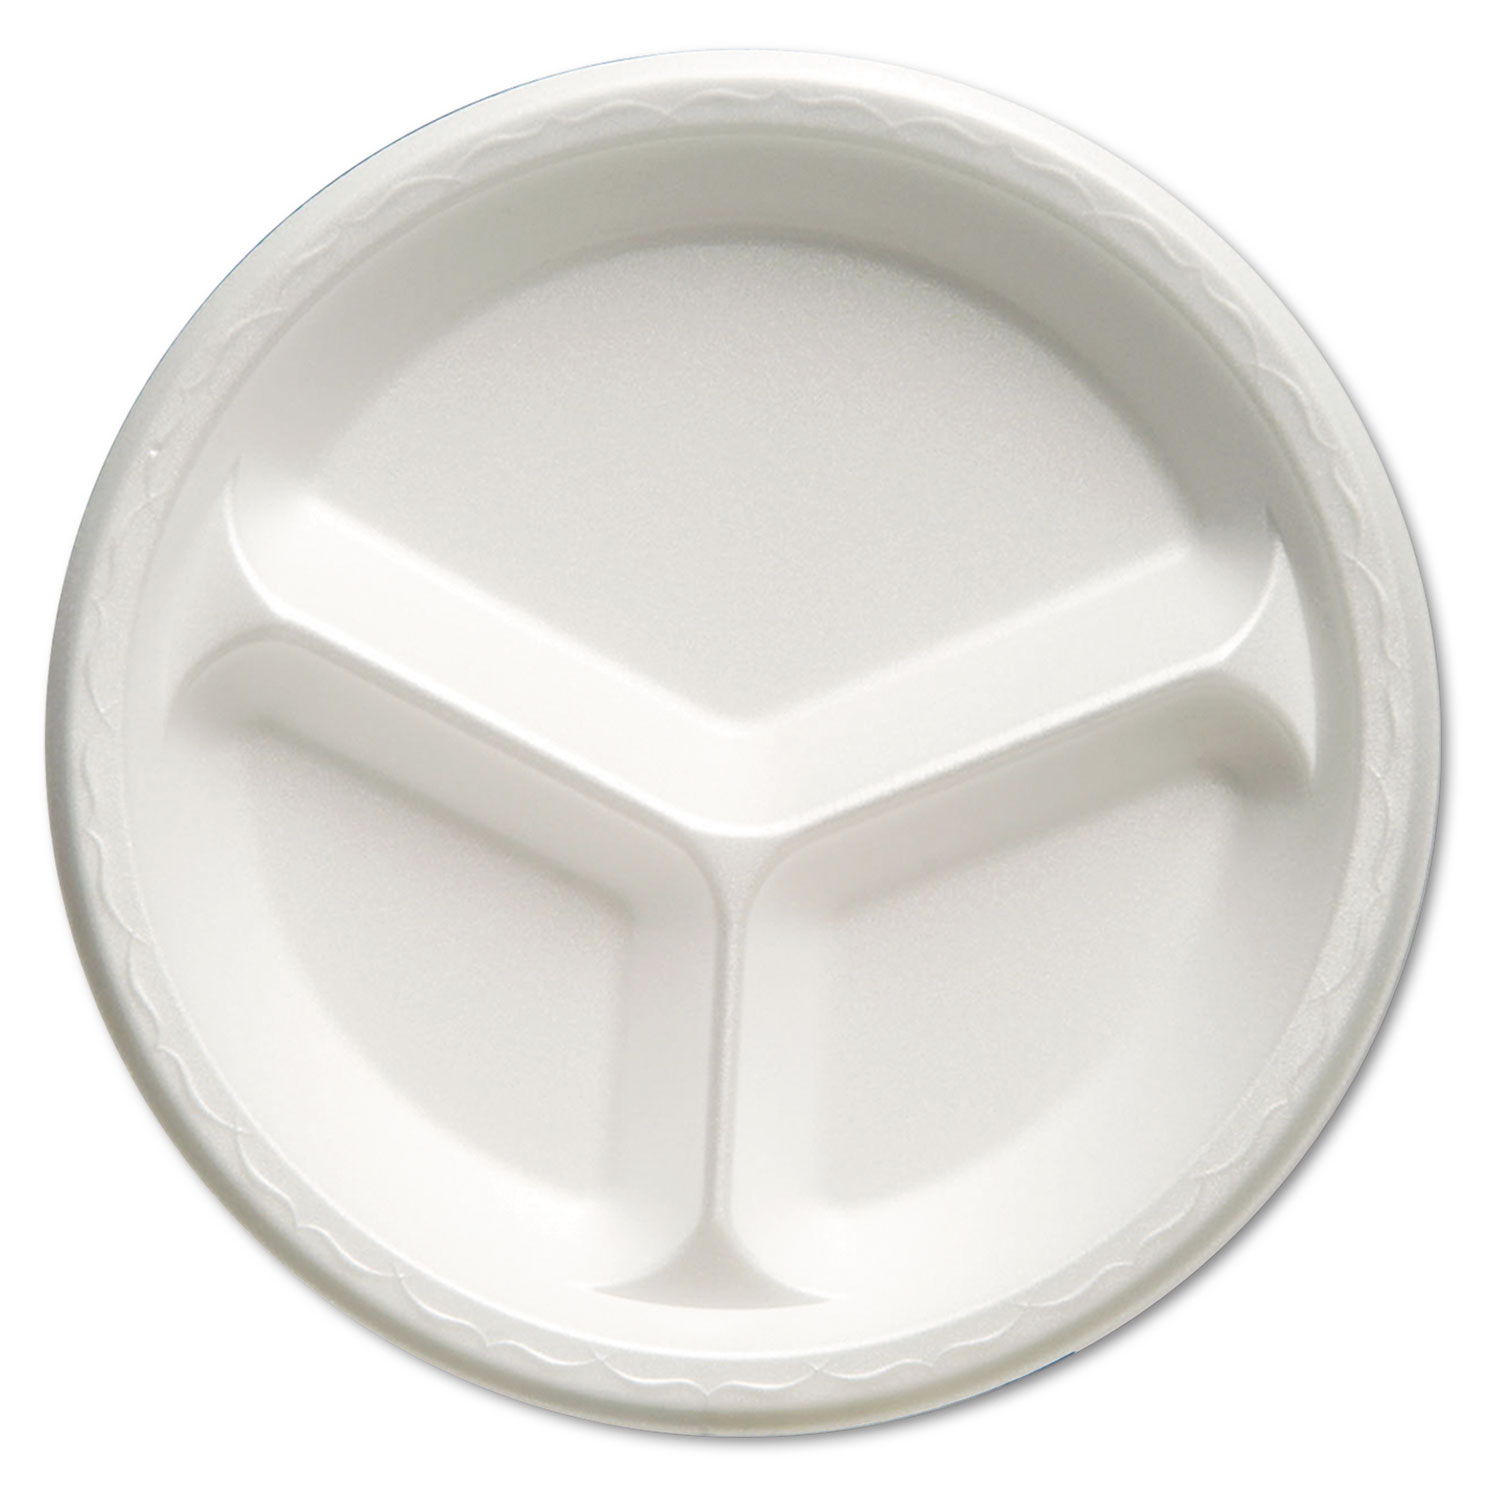  Genpak 81300--- Foam Dinnerware, Plate, 3-Comp, 10 1/4 dia, White, 125/Pack, 4 Packs/Carton (GNP81300) 